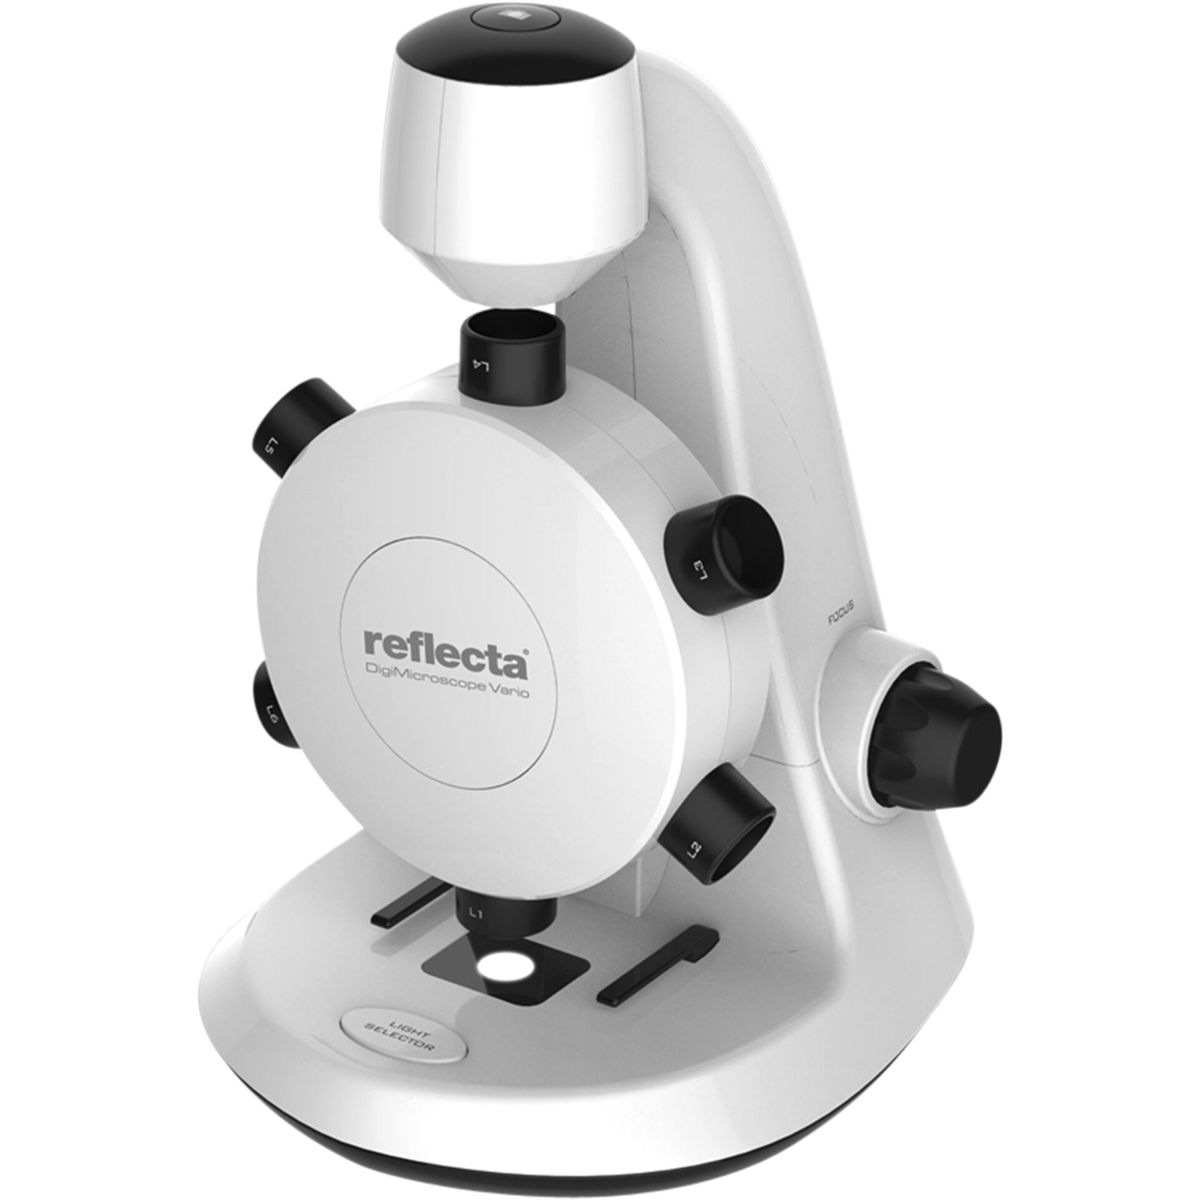 REFLECTA DigiMicroscope fach, 100 - 600 Standmikroskop Vario mm, 1